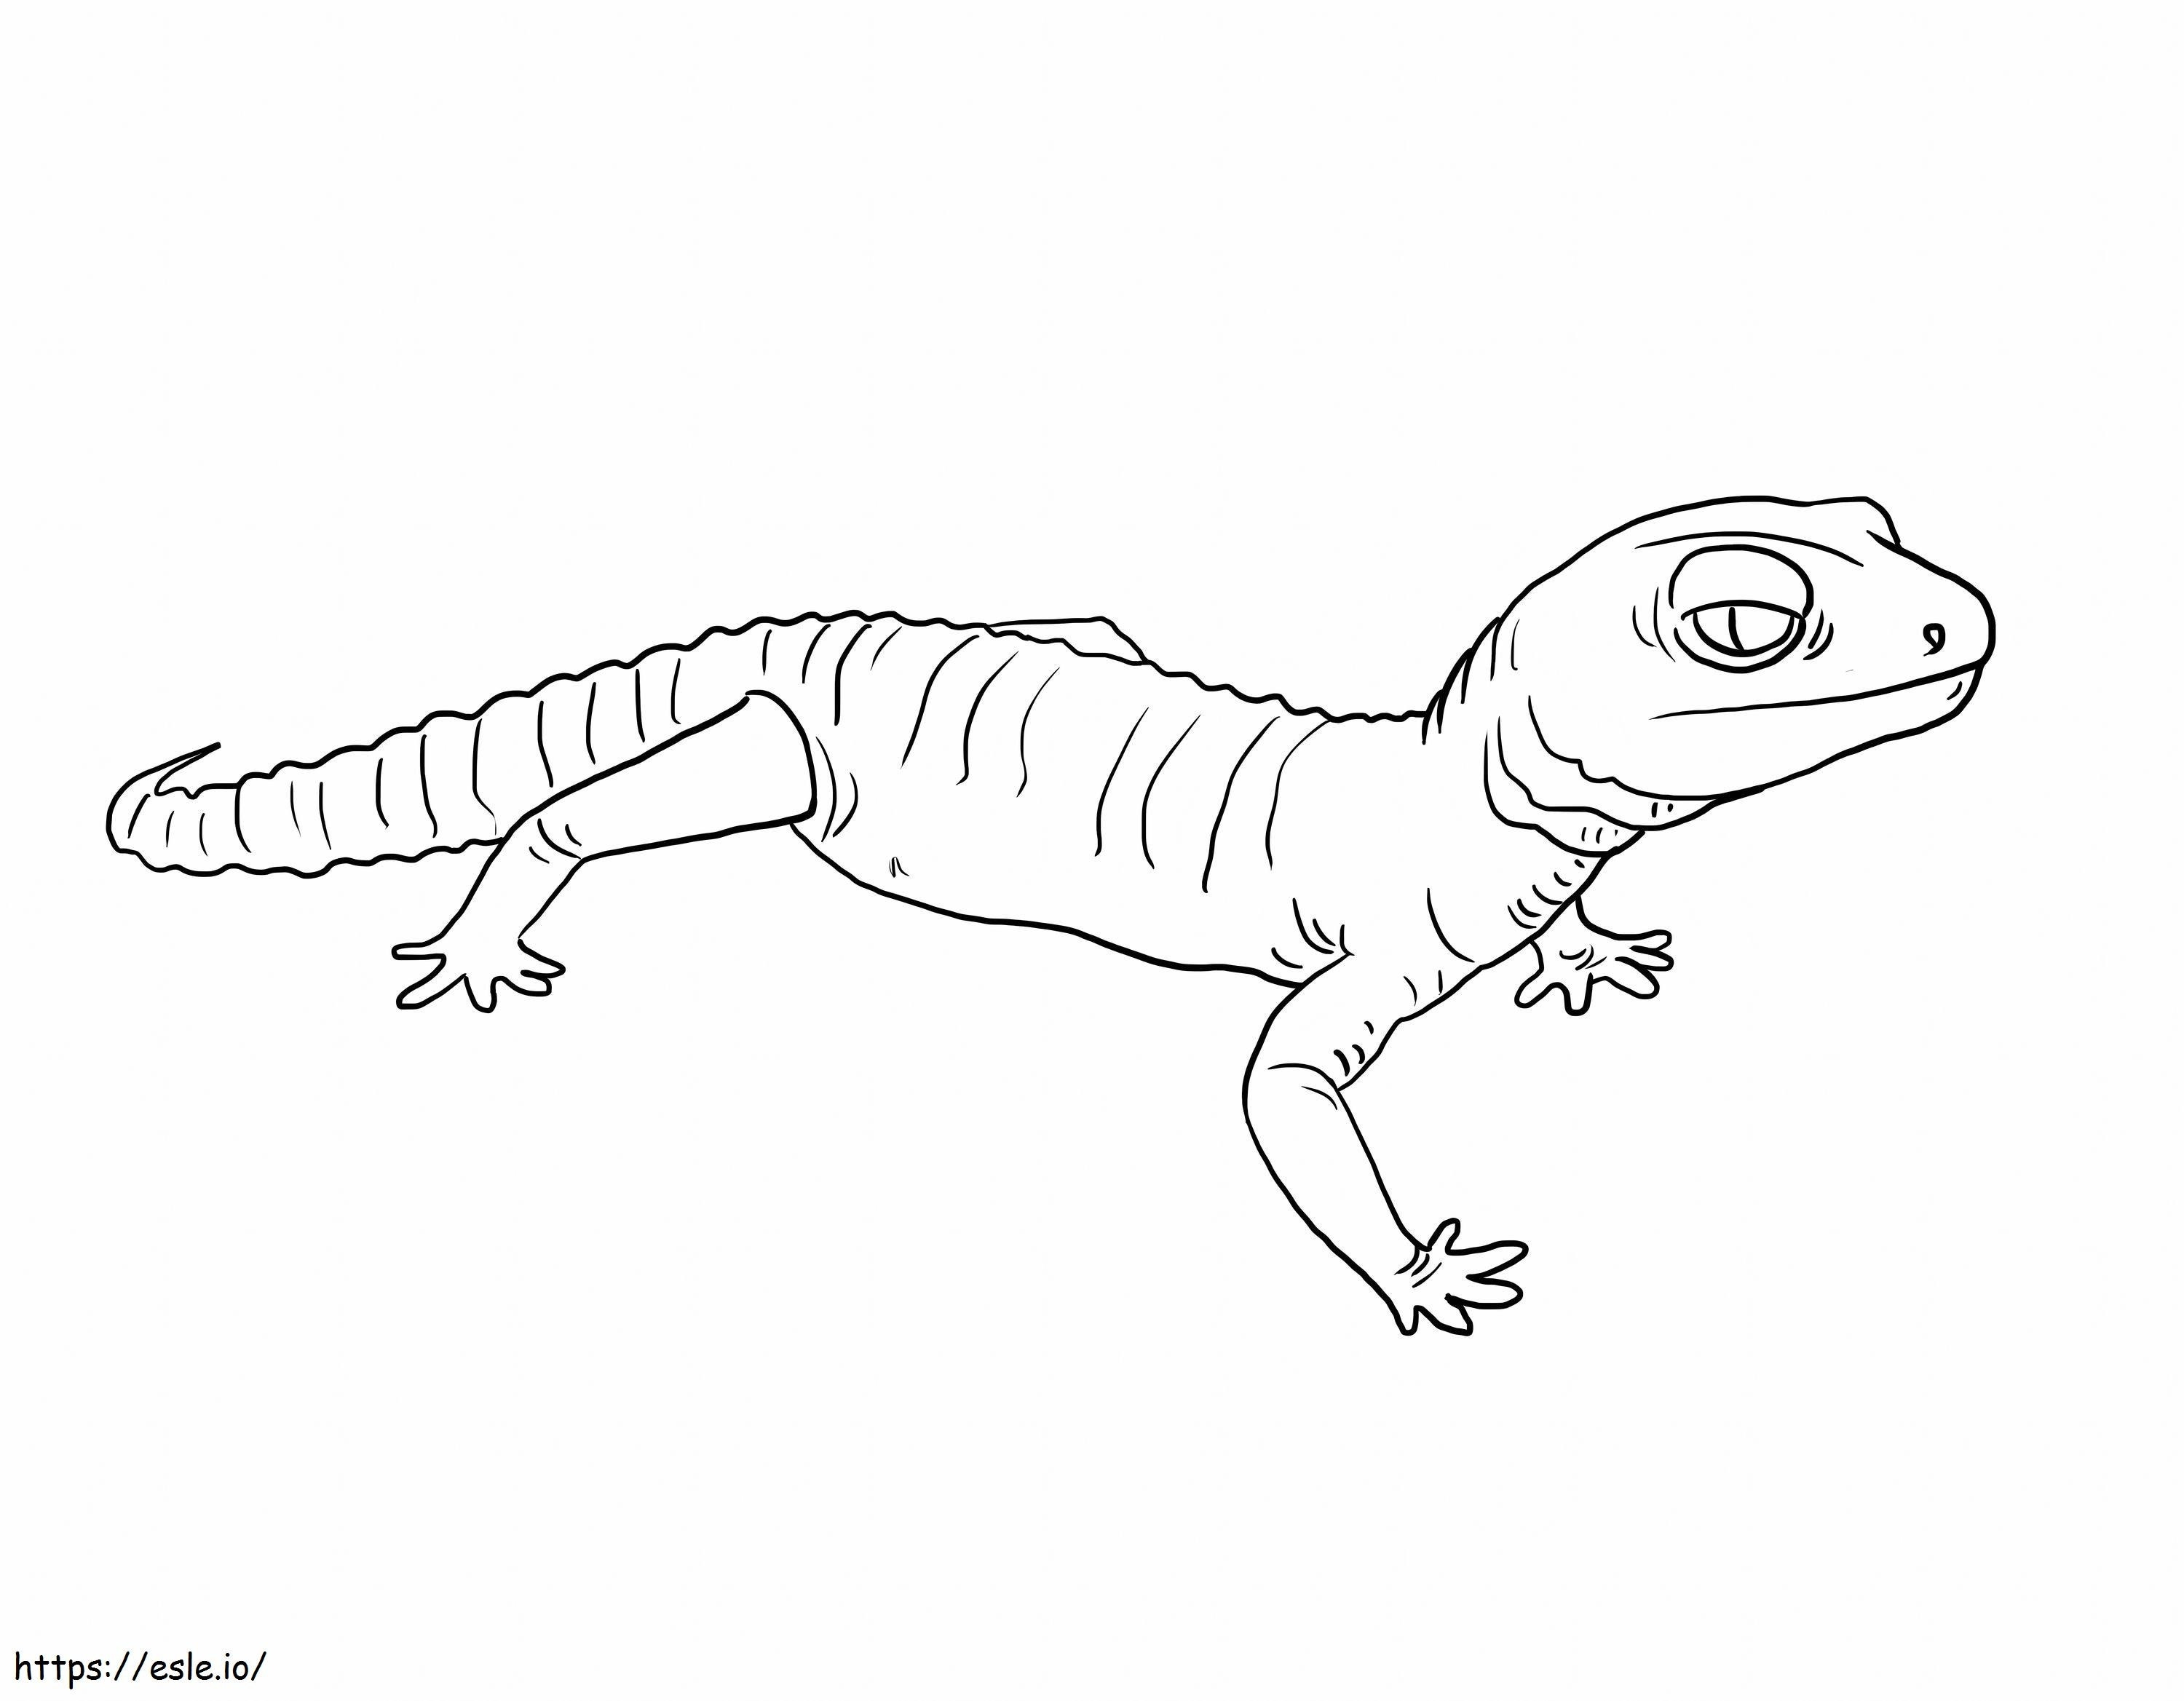 Coloriage Gecko Simple à imprimer dessin